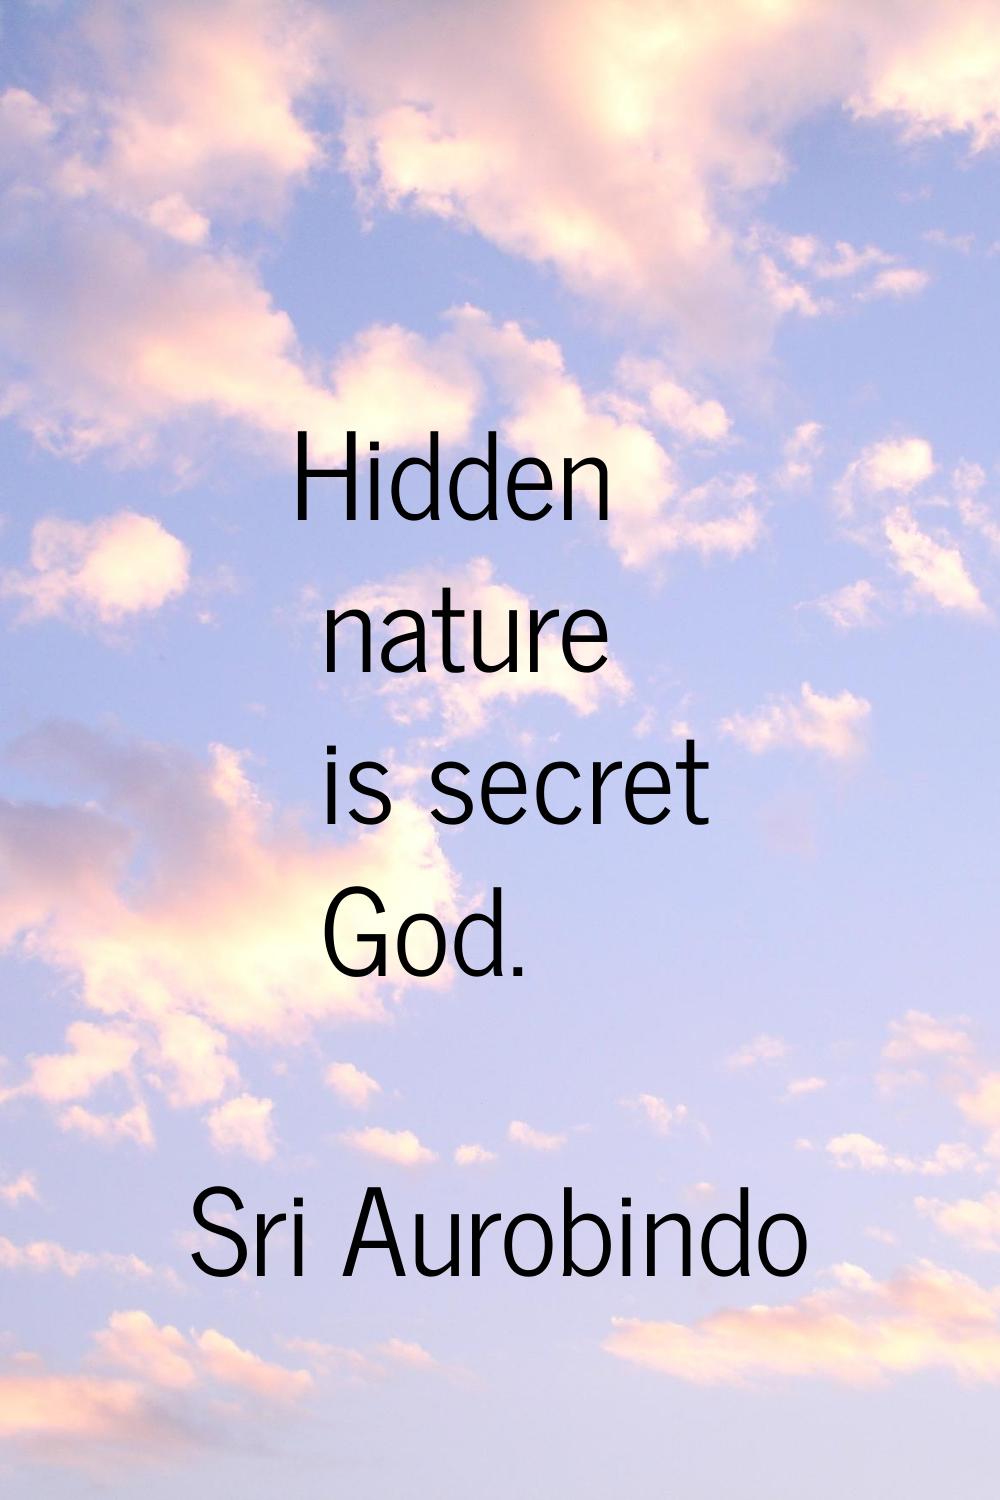 Hidden nature is secret God.